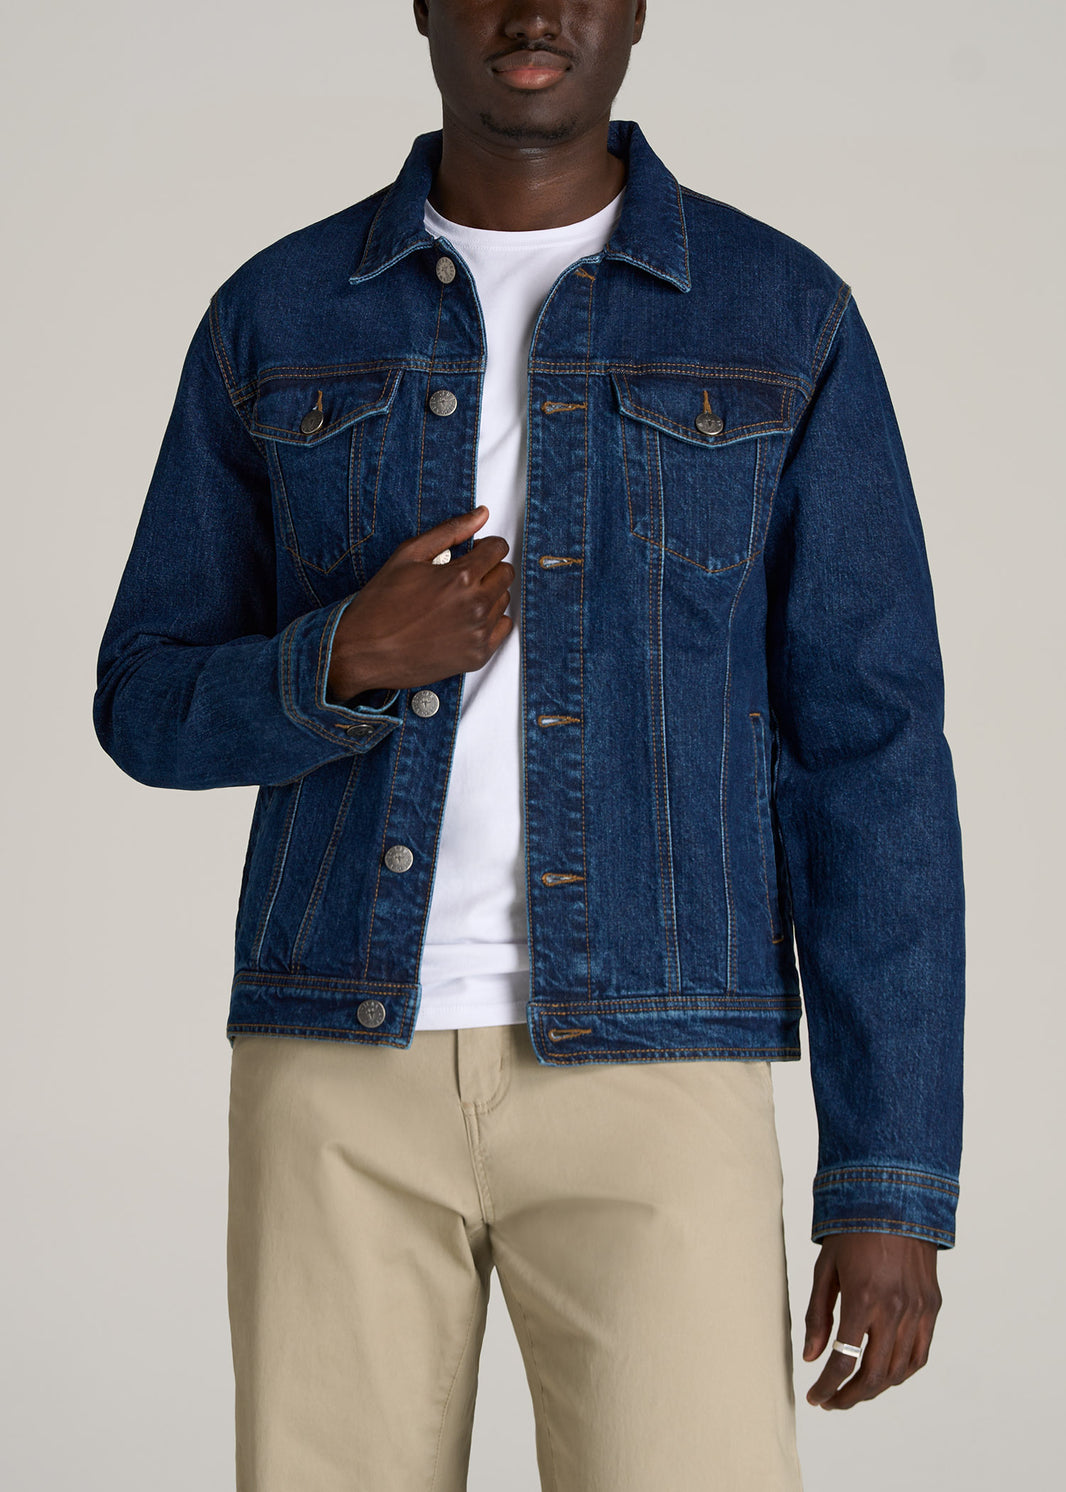 Tall Men's Jackets & Coats | American Tall